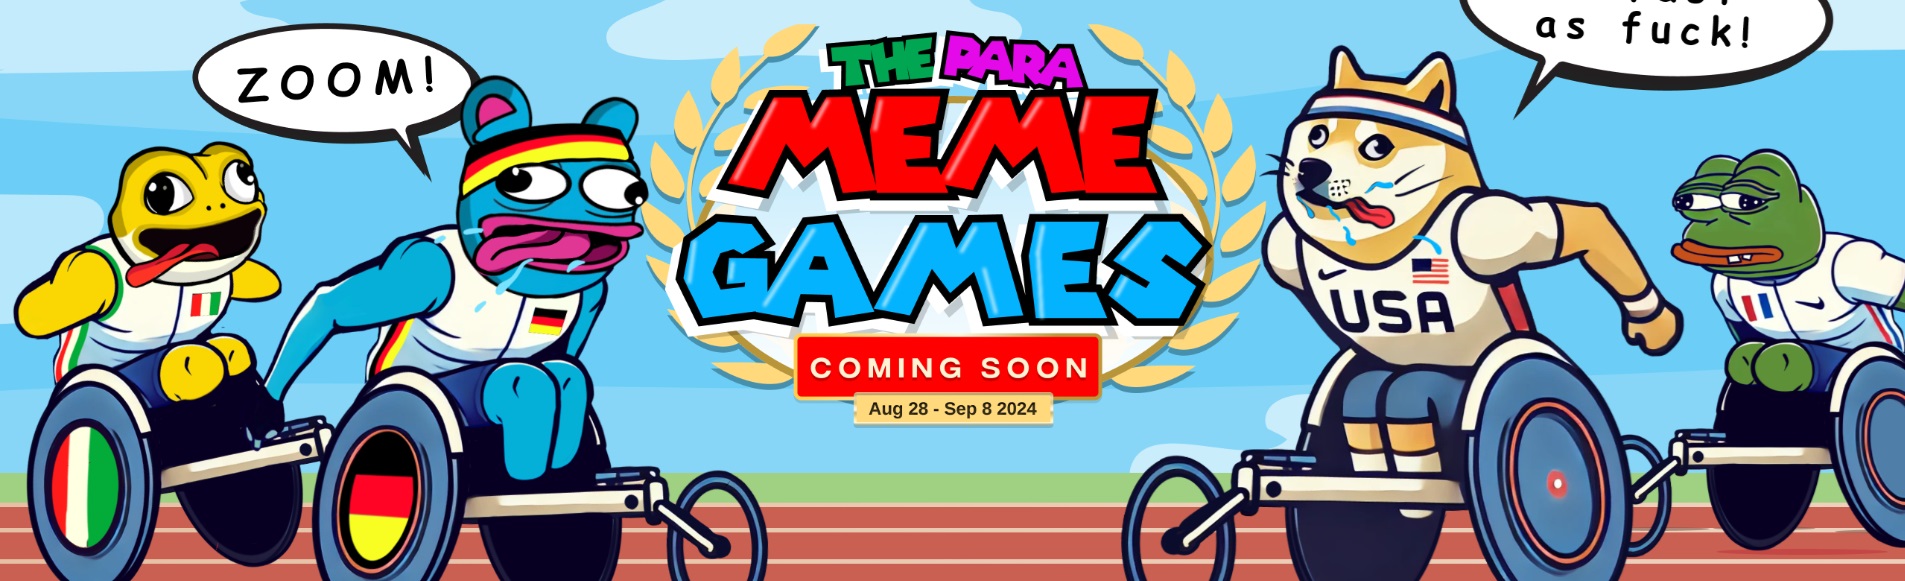 The Meme Games Goal